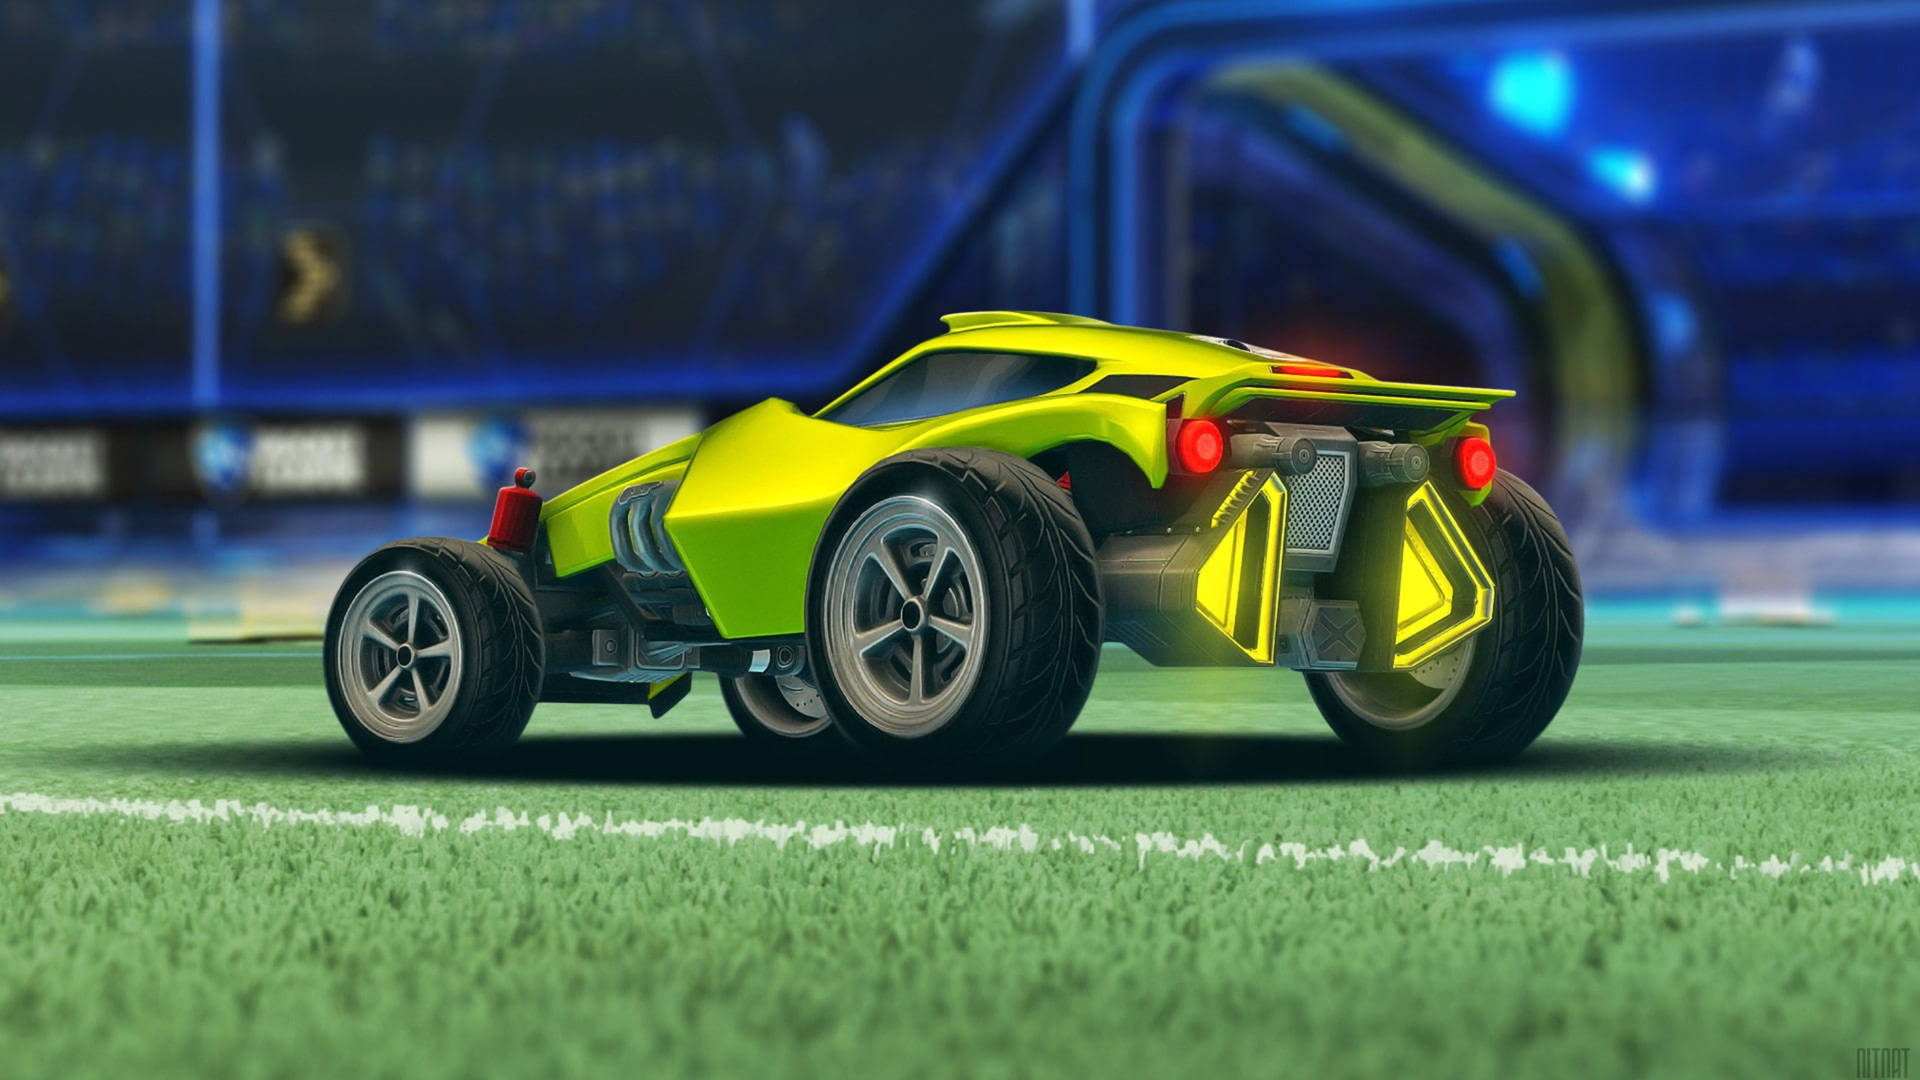 Rocket League Hd Lime Green Car Wallpaper